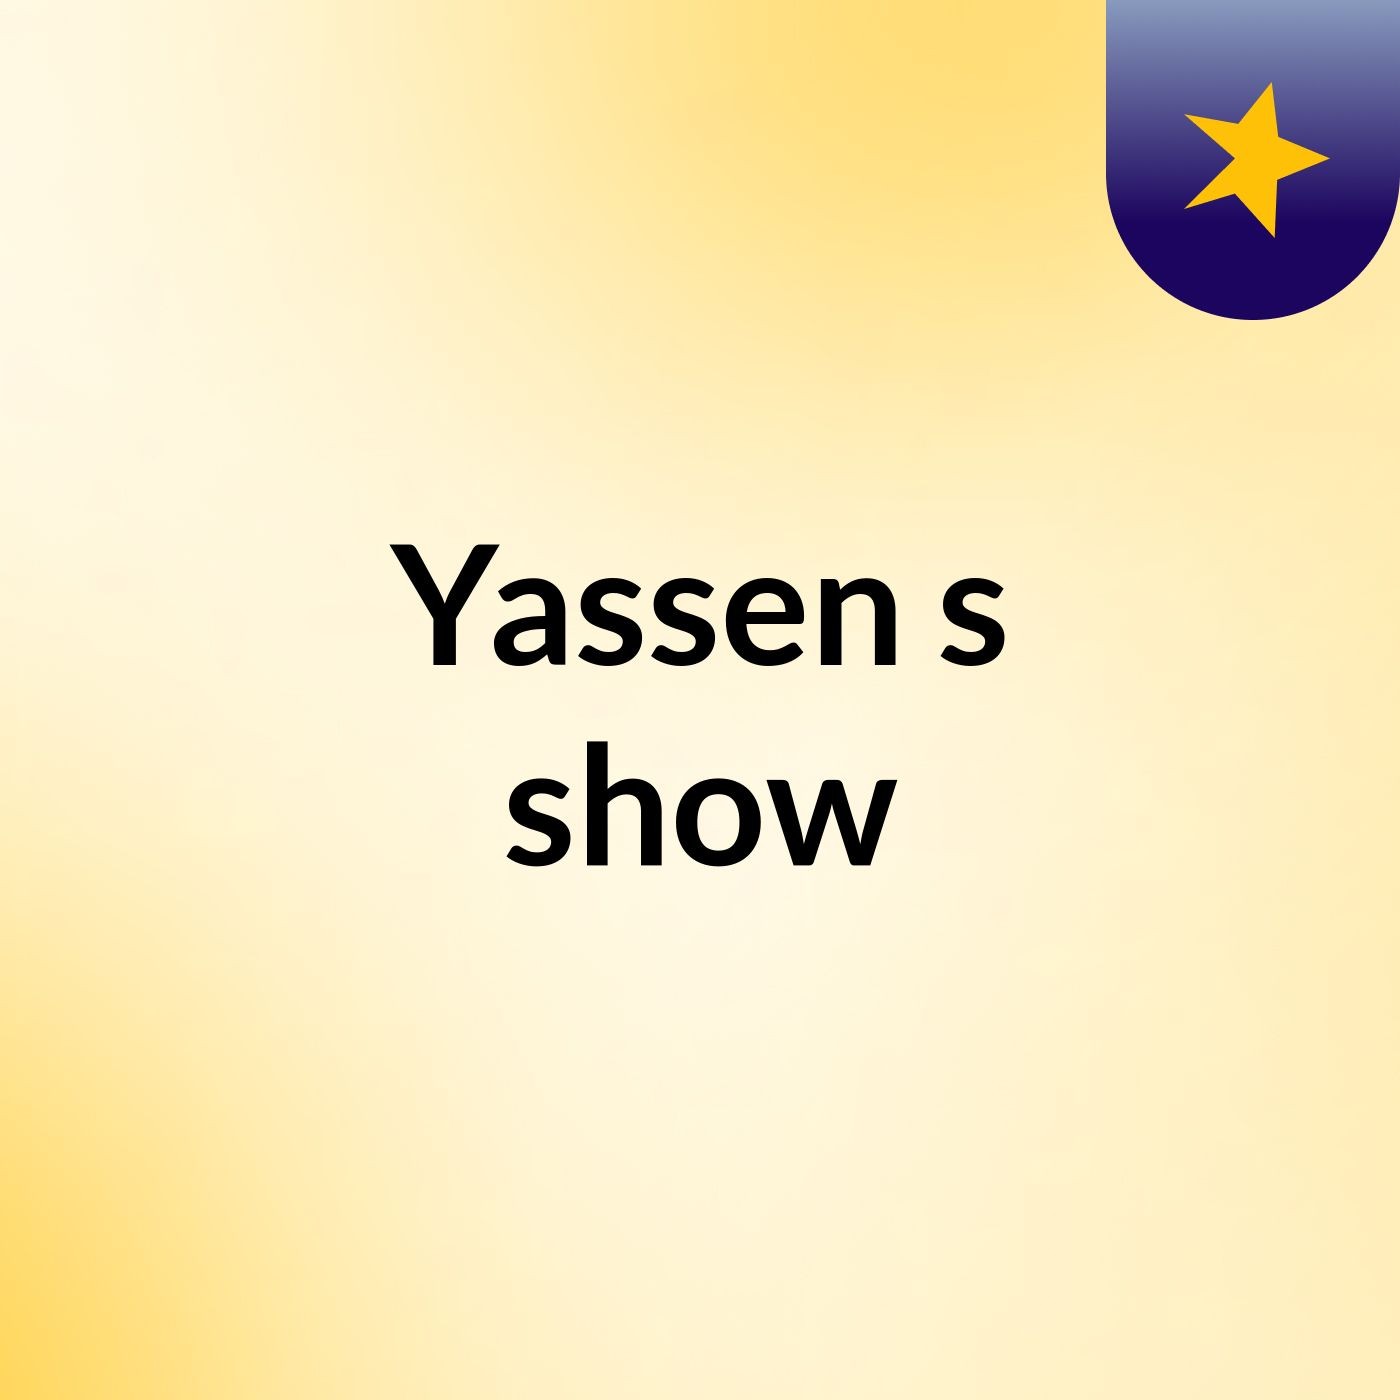 Yassen's show